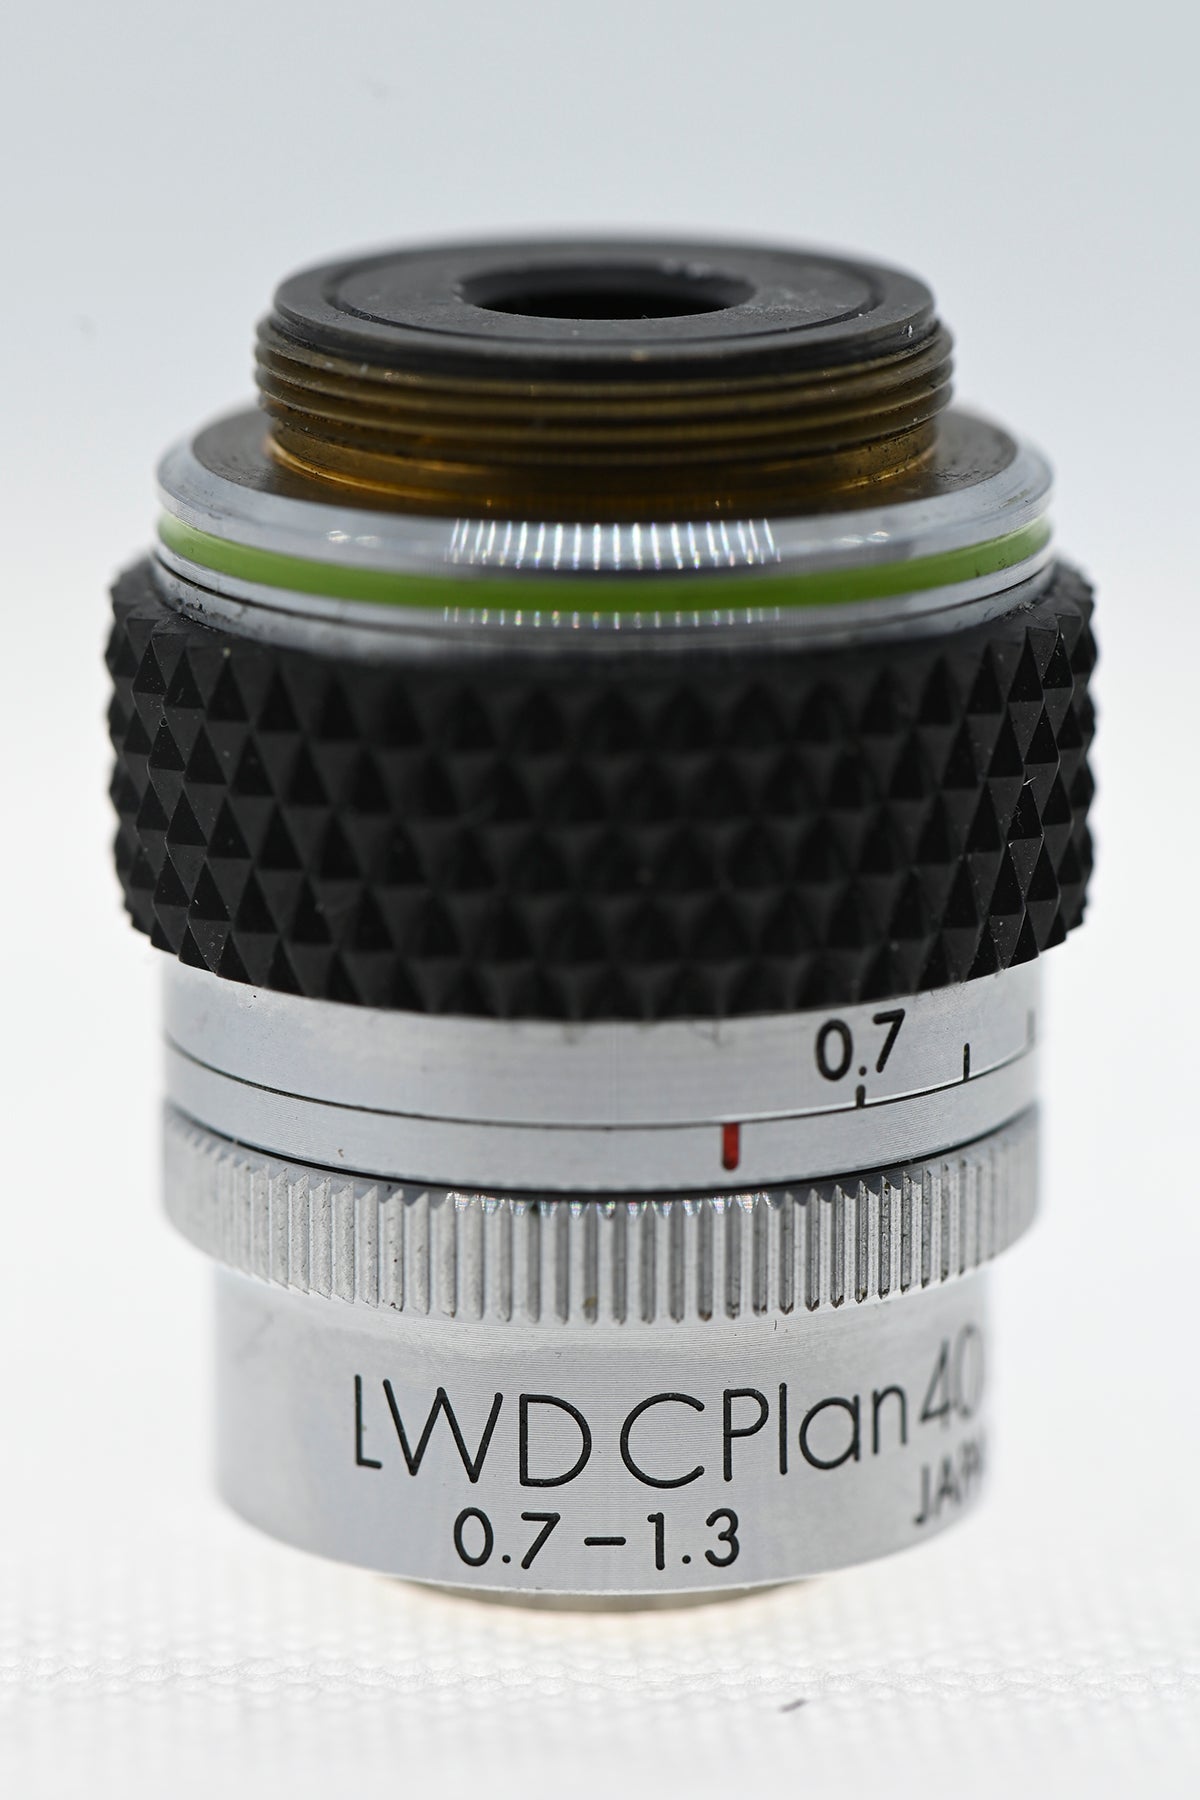 Olympus LWD 40x CPlan / With Correction Collar